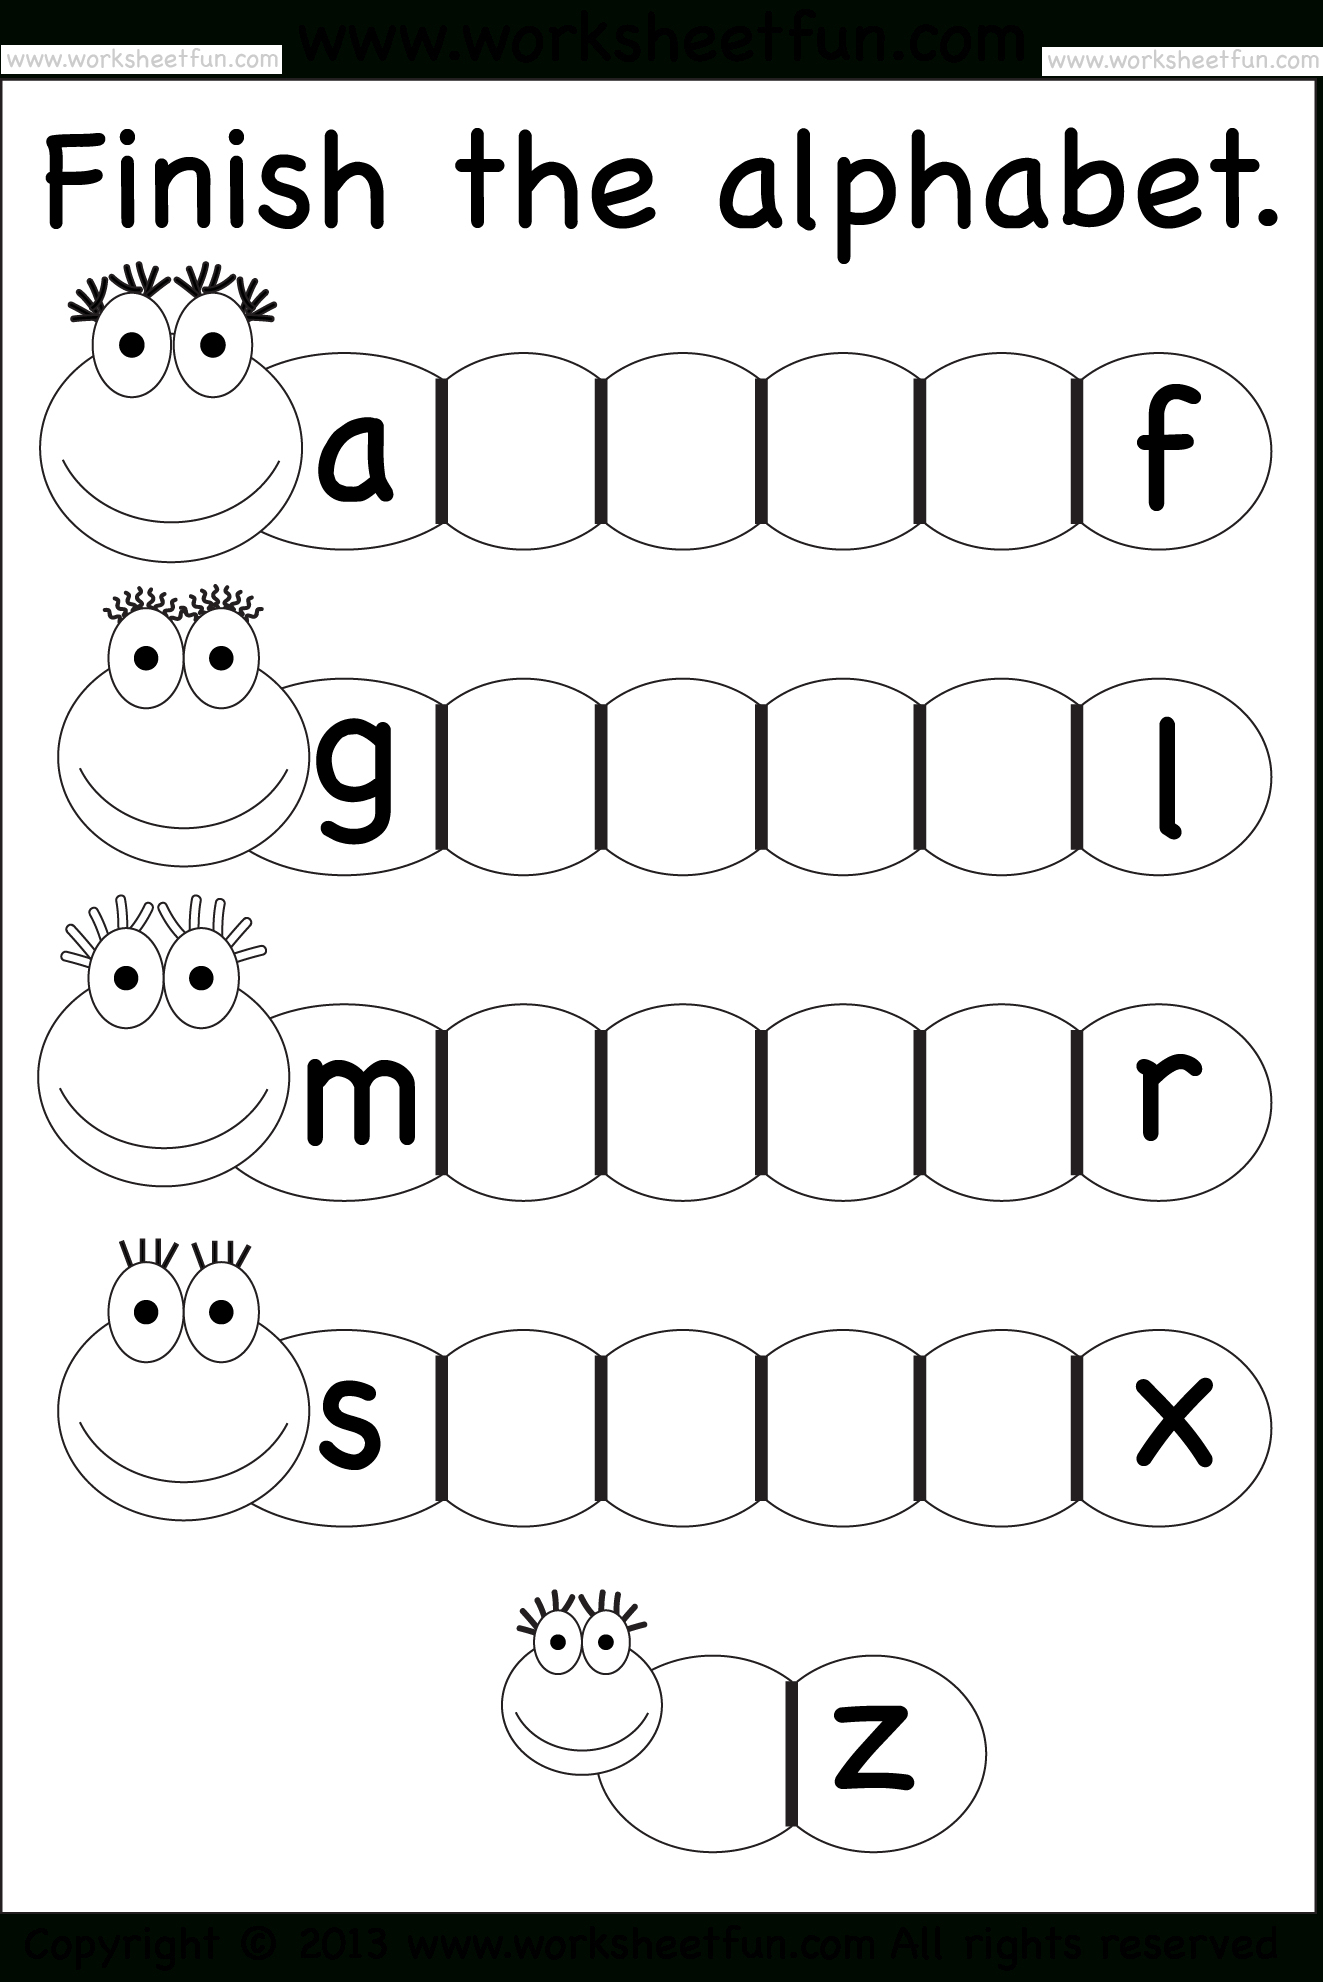 Free Printable Alphabet Worksheets For Grade 1 - Photos Alphabet - Free Printable Alphabet Worksheets For Grade 1